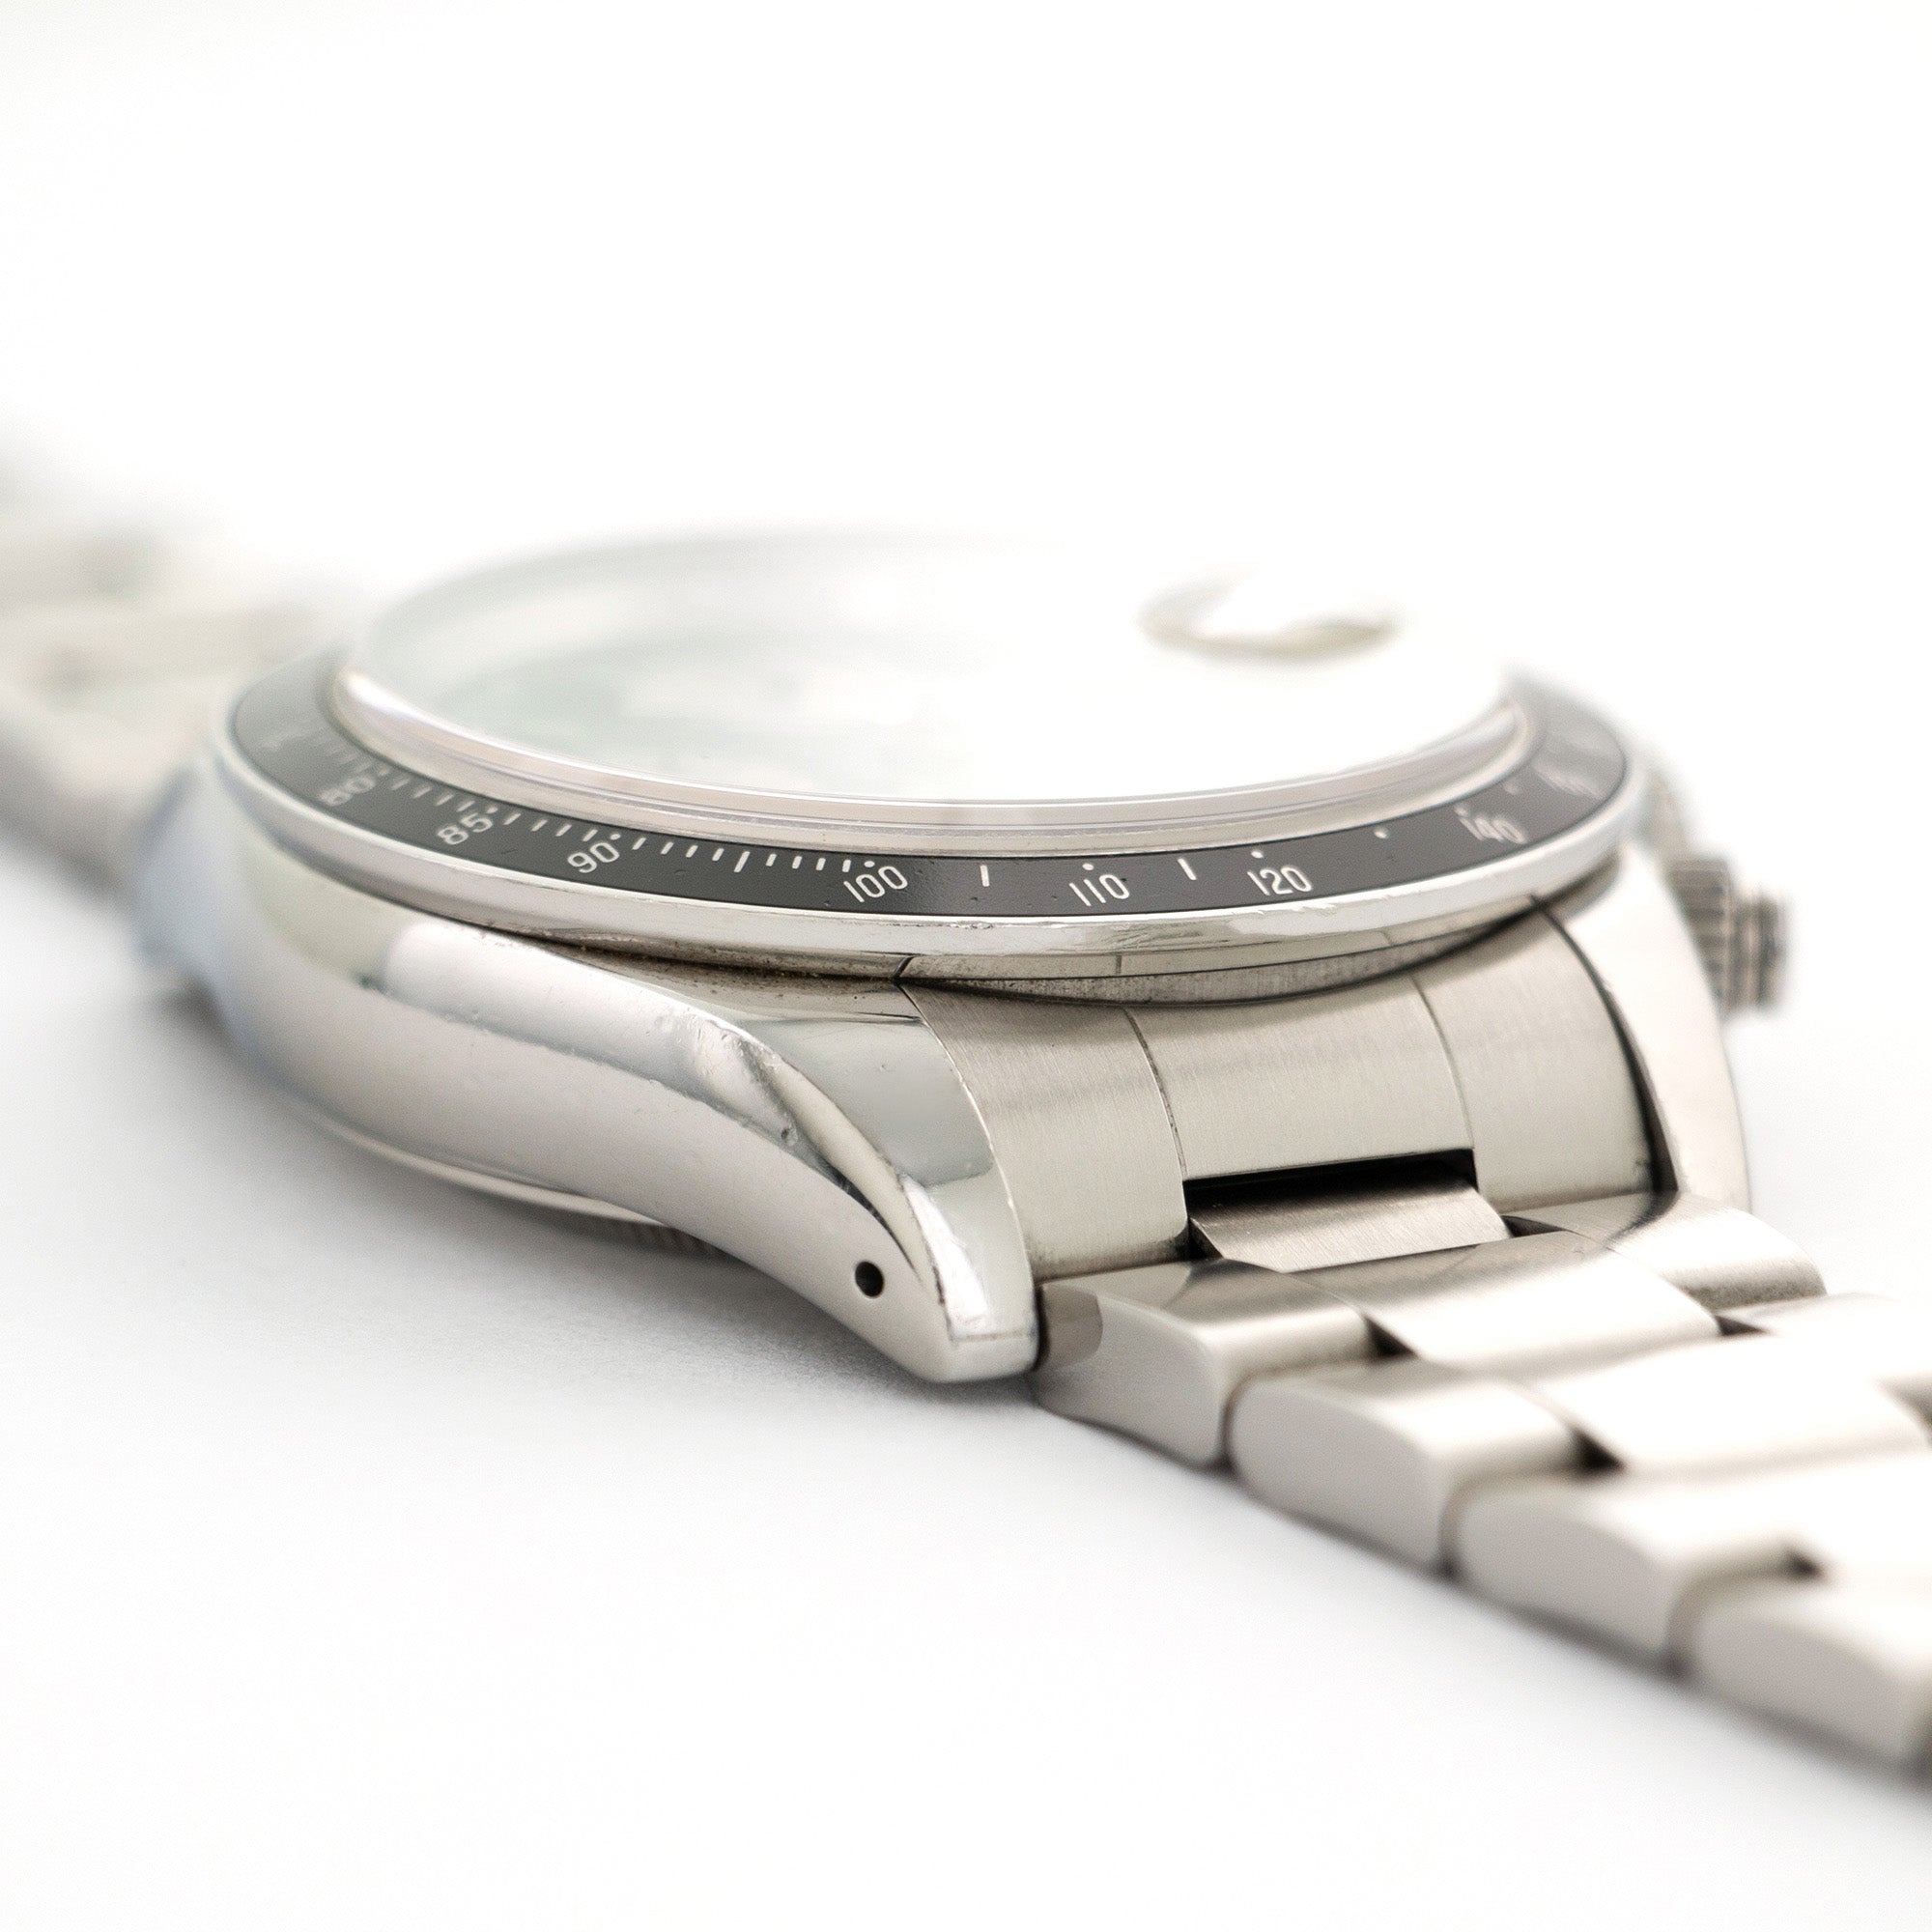 Tudor - Tudor Chrono Time Automatic Watch Ref. 79260 - The Keystone Watches